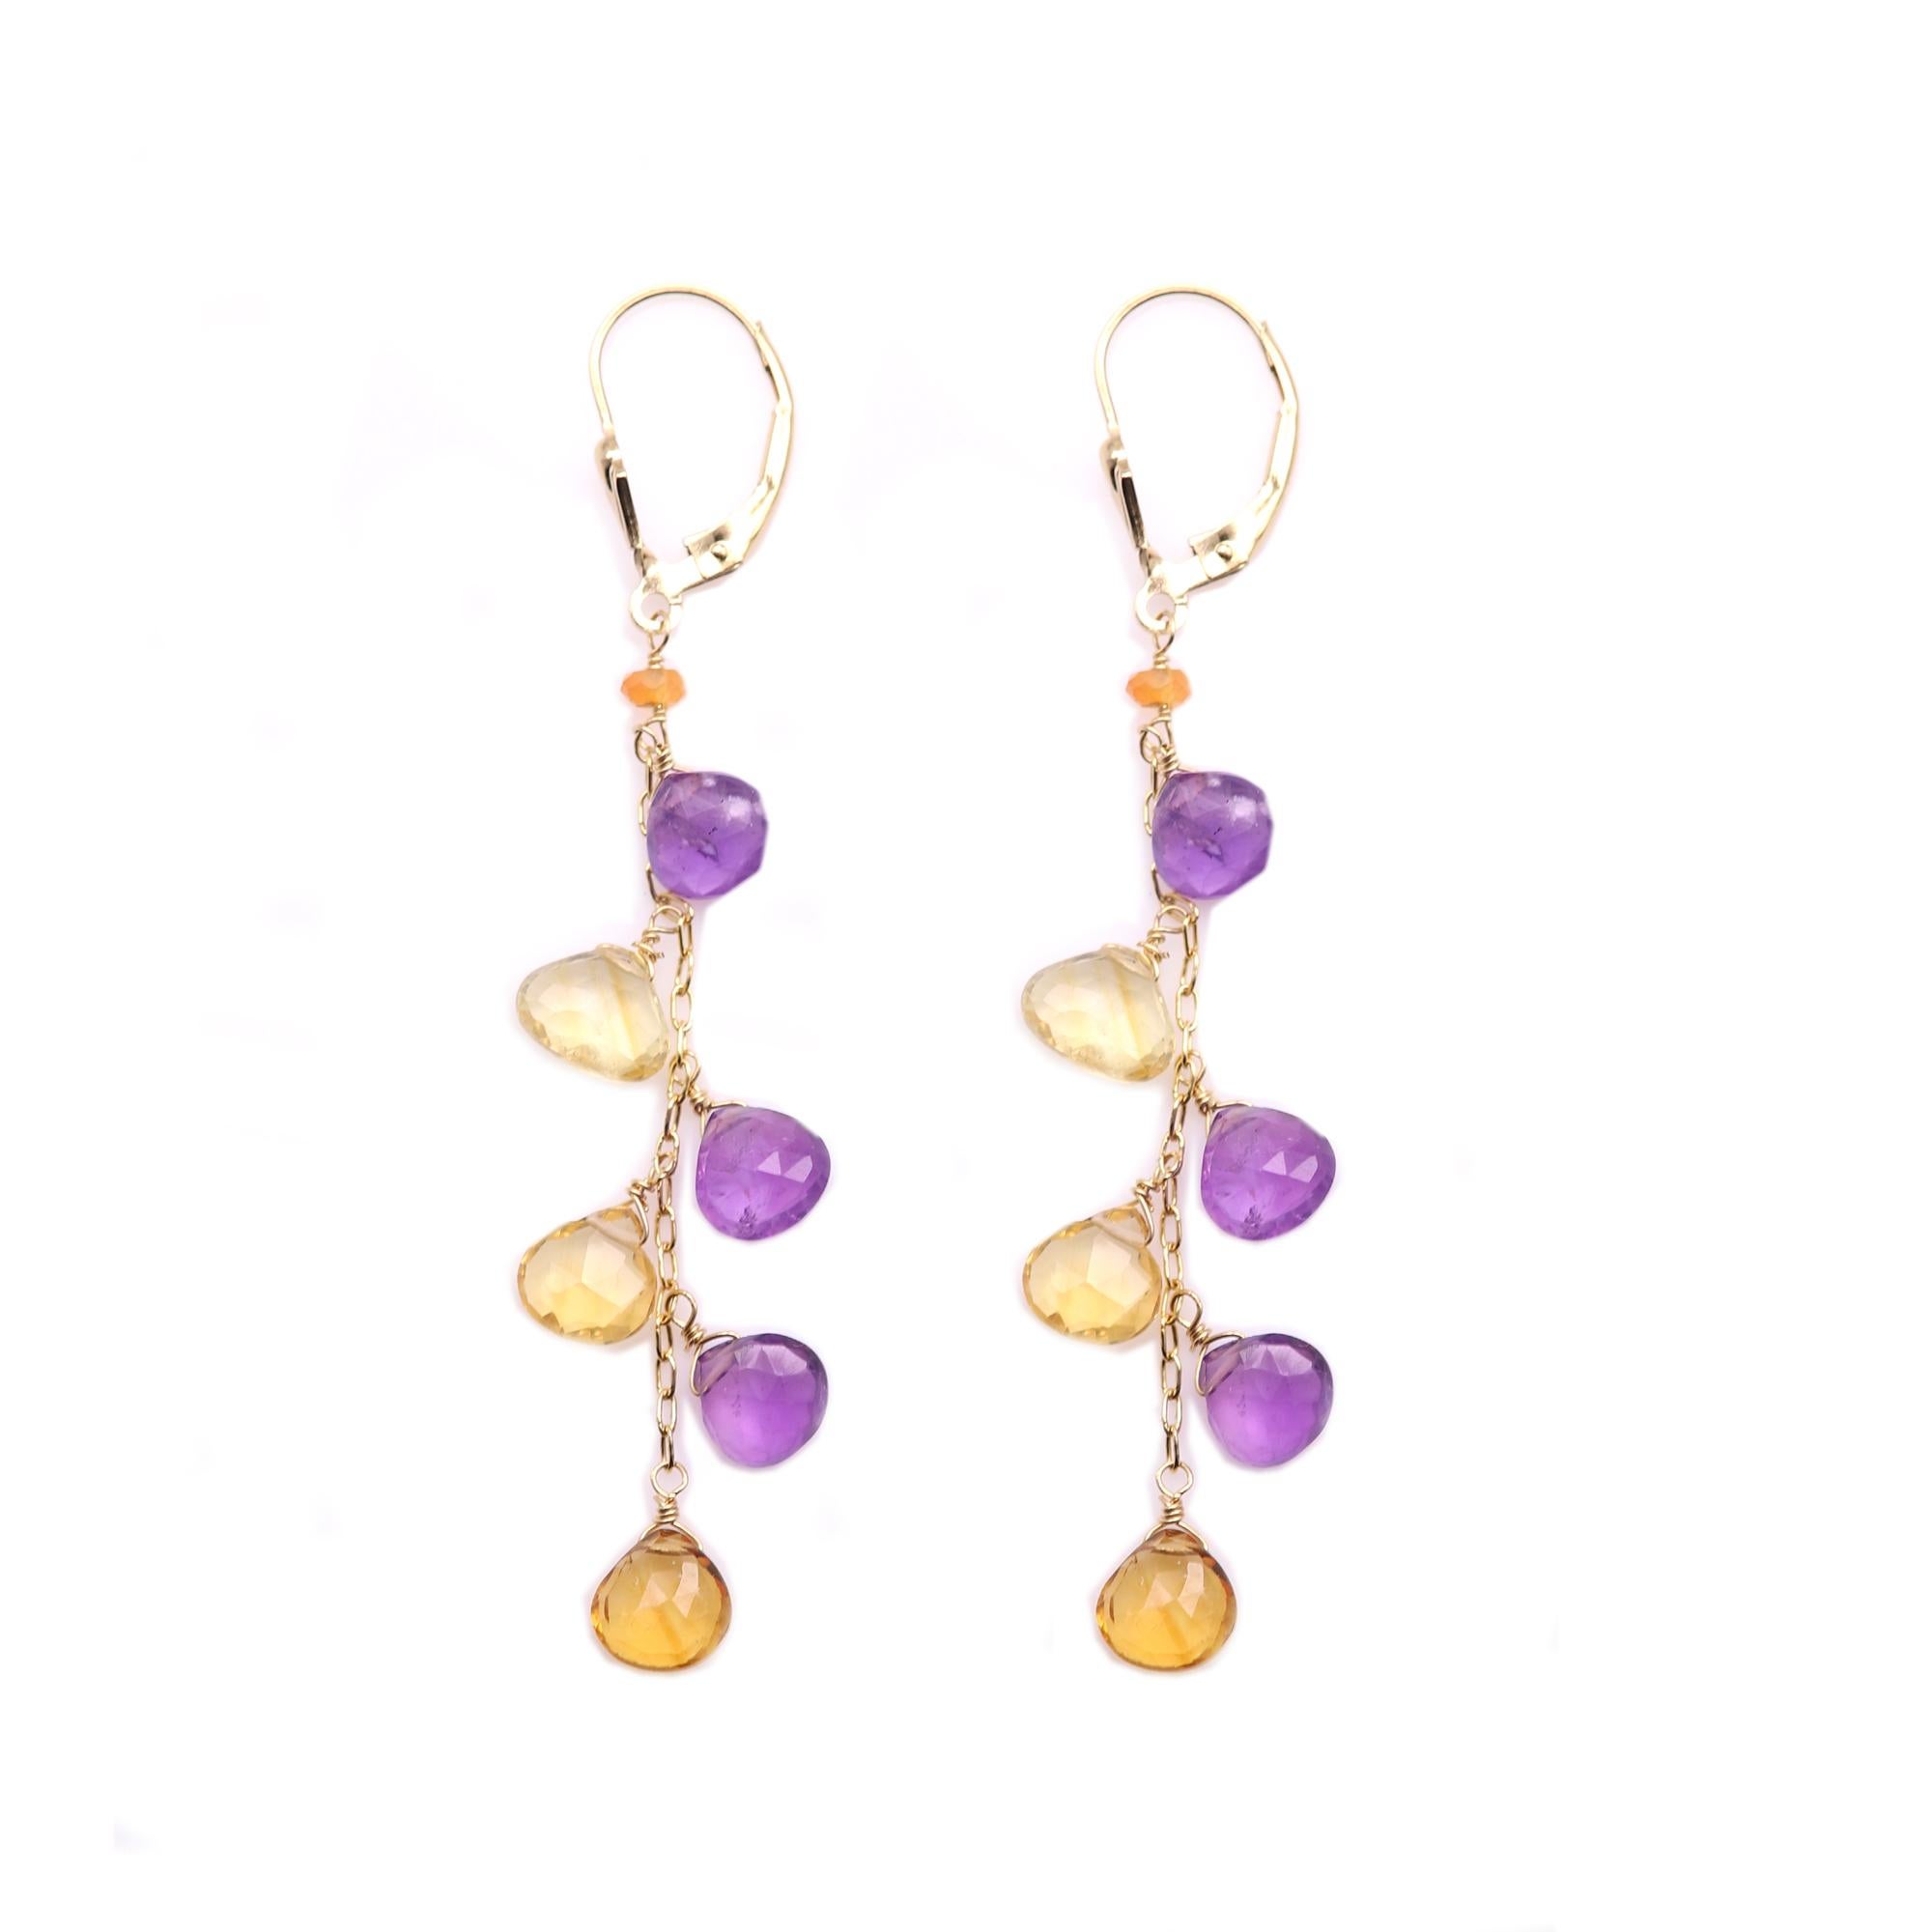 14k gold multi-color smi-precious stone earring